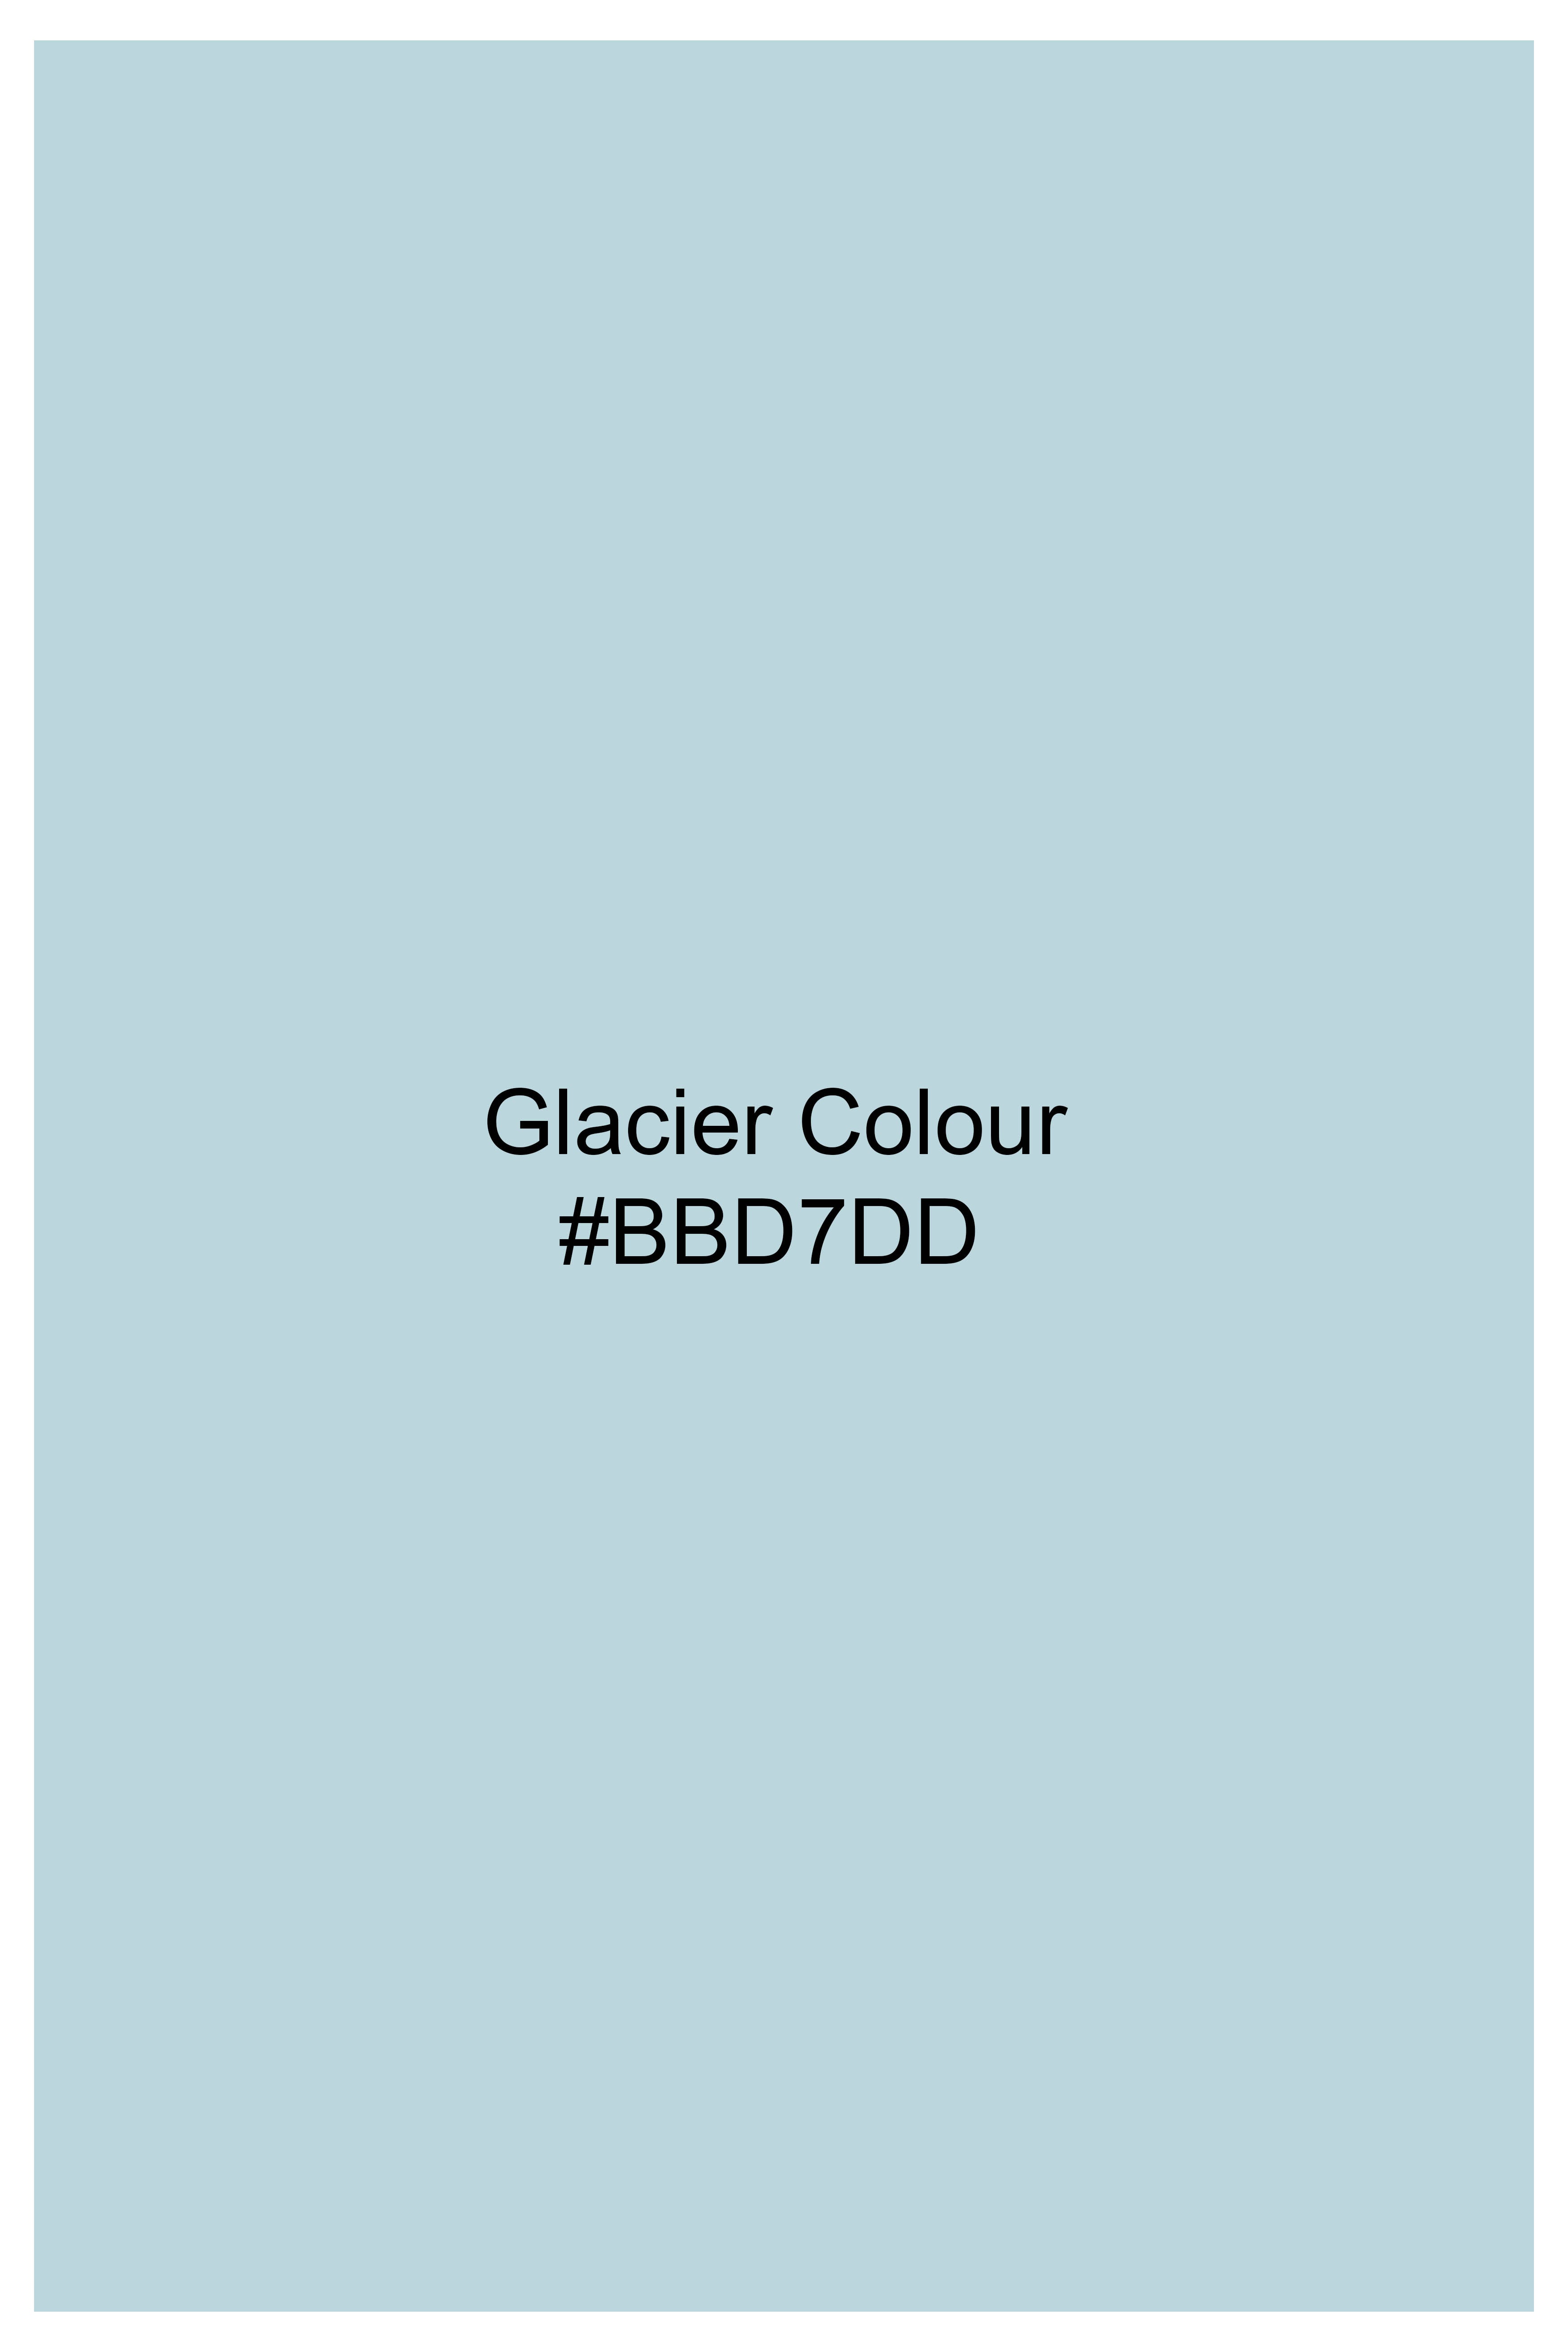 Glacier Blue Shree Krishna Painted Super Soft Premium Cotton Designer Shirt 8863-BLK-RPRT86-38, 8863-BLK-RPRT86-H-38, 8863-BLK-RPRT86-39, 8863-BLK-RPRT86-H-39, 8863-BLK-RPRT86-40, 8863-BLK-RPRT86-H-40, 8863-BLK-RPRT86-42, 8863-BLK-RPRT86-H-42, 8863-BLK-RPRT86-44, 8863-BLK-RPRT86-H-44, 8863-BLK-RPRT86-46, 8863-BLK-RPRT86-H-46, 8863-BLK-RPRT86-48, 8863-BLK-RPRT86-H-48, 8863-BLK-RPRT86-50, 8863-BLK-RPRT86-H-50, 8863-BLK-RPRT86-52, 8863-BLK-RPRT86-H-52